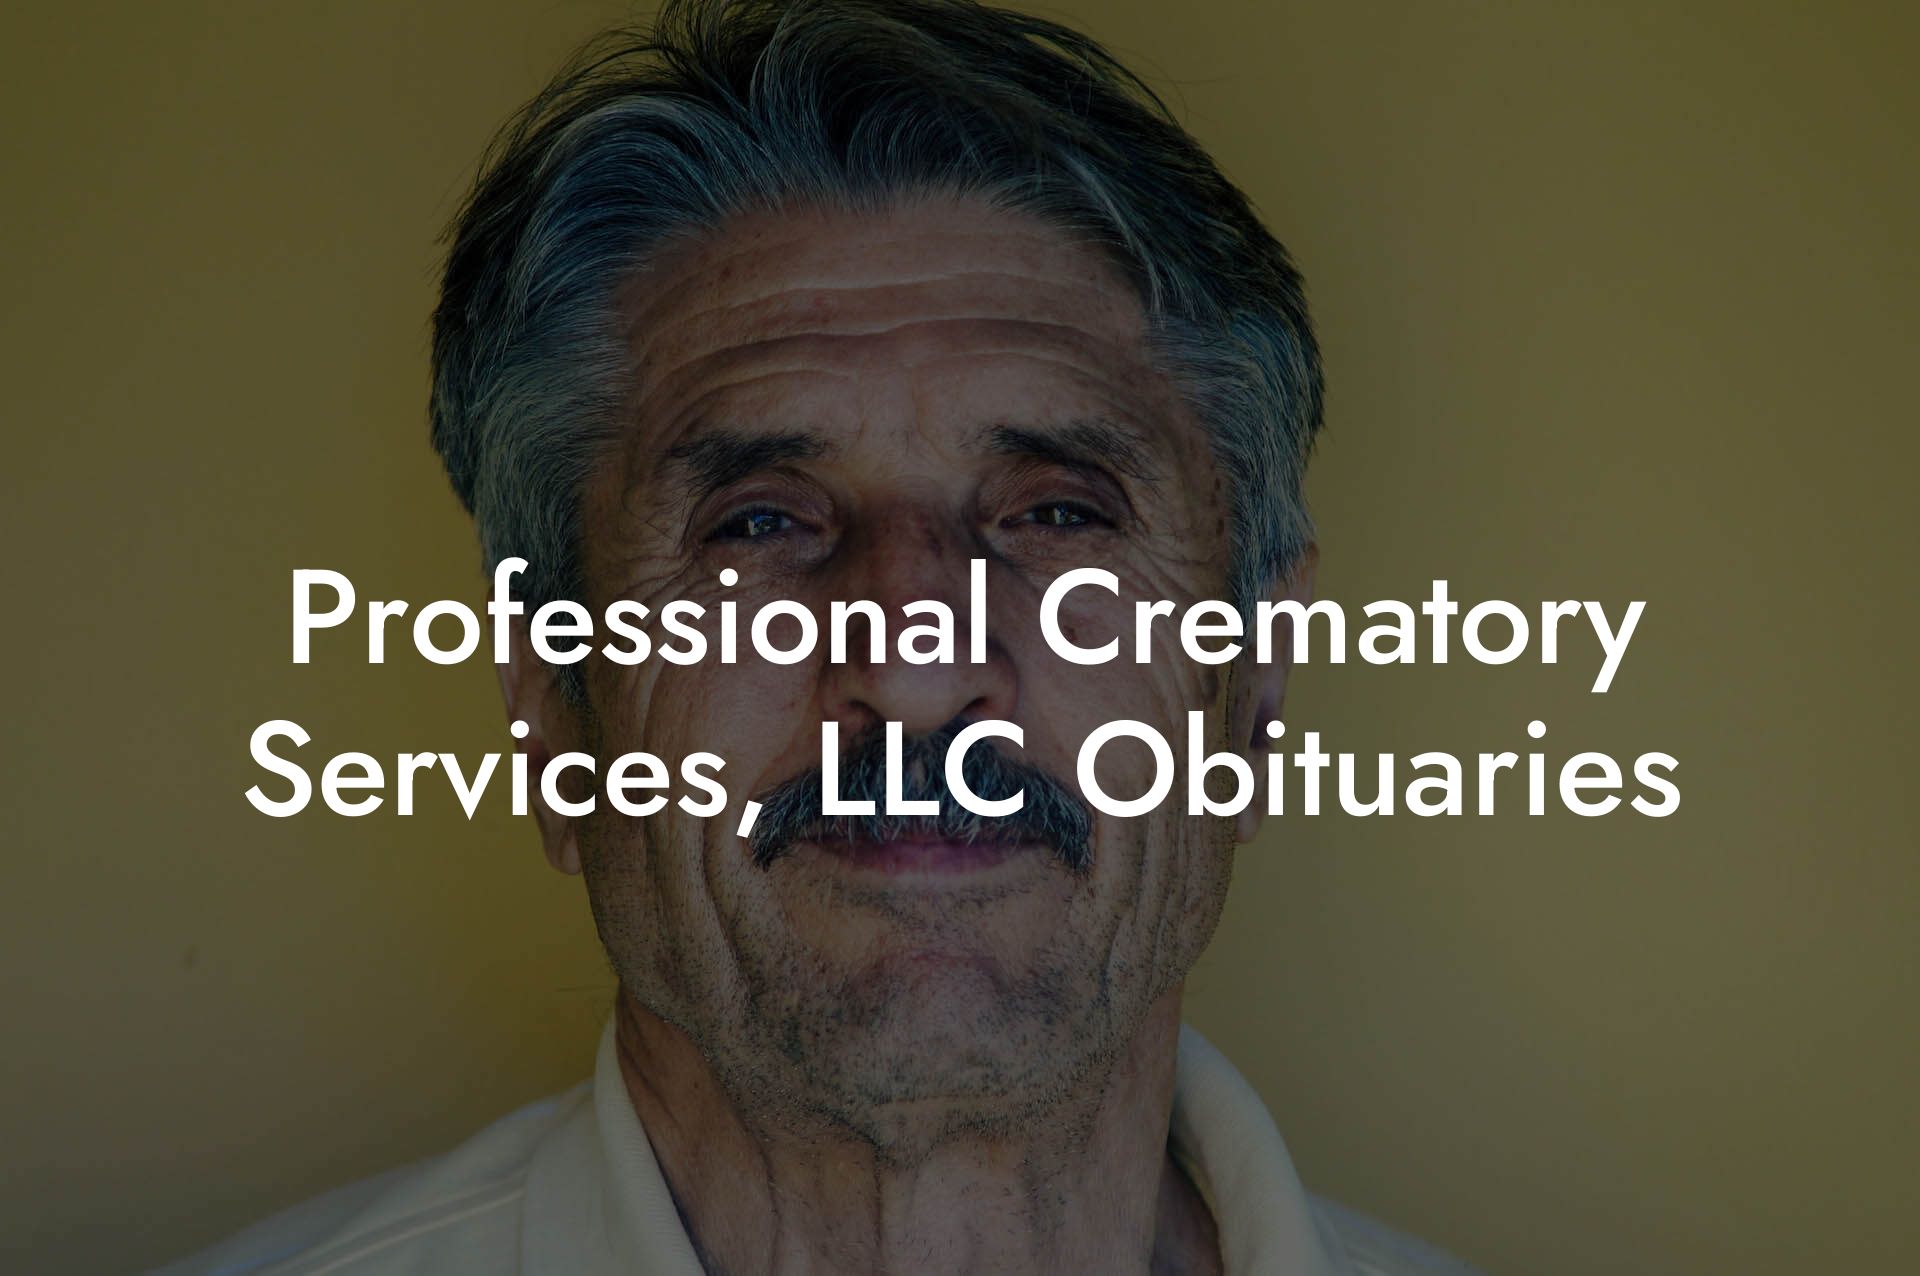 Professional Crematory Services, LLC Obituaries